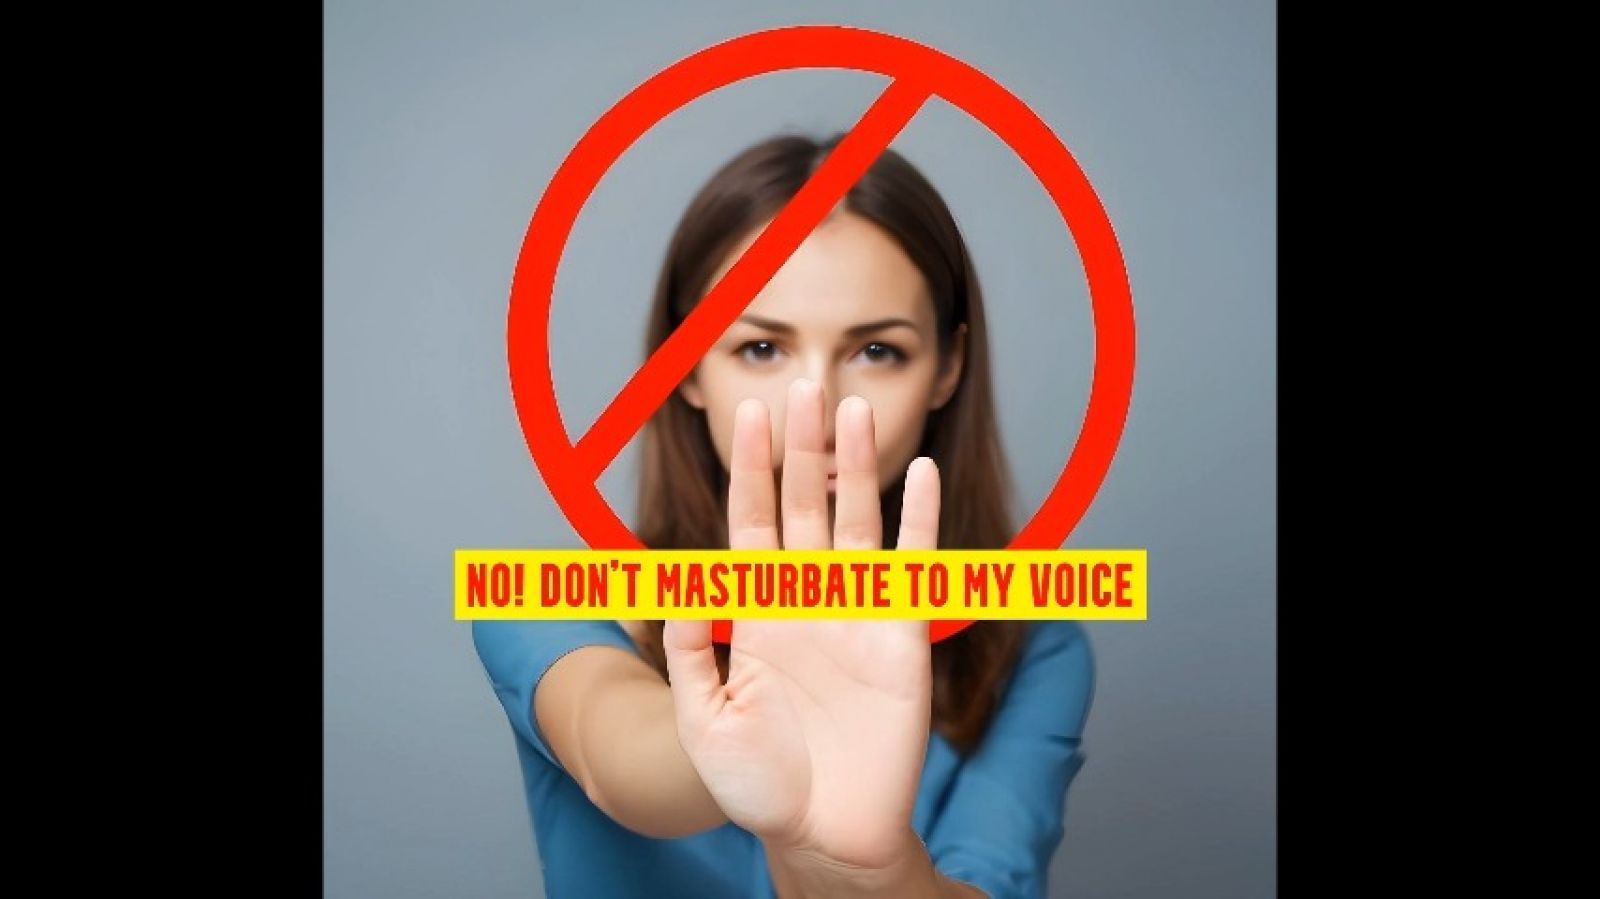 No! Don't masturbate to my voice